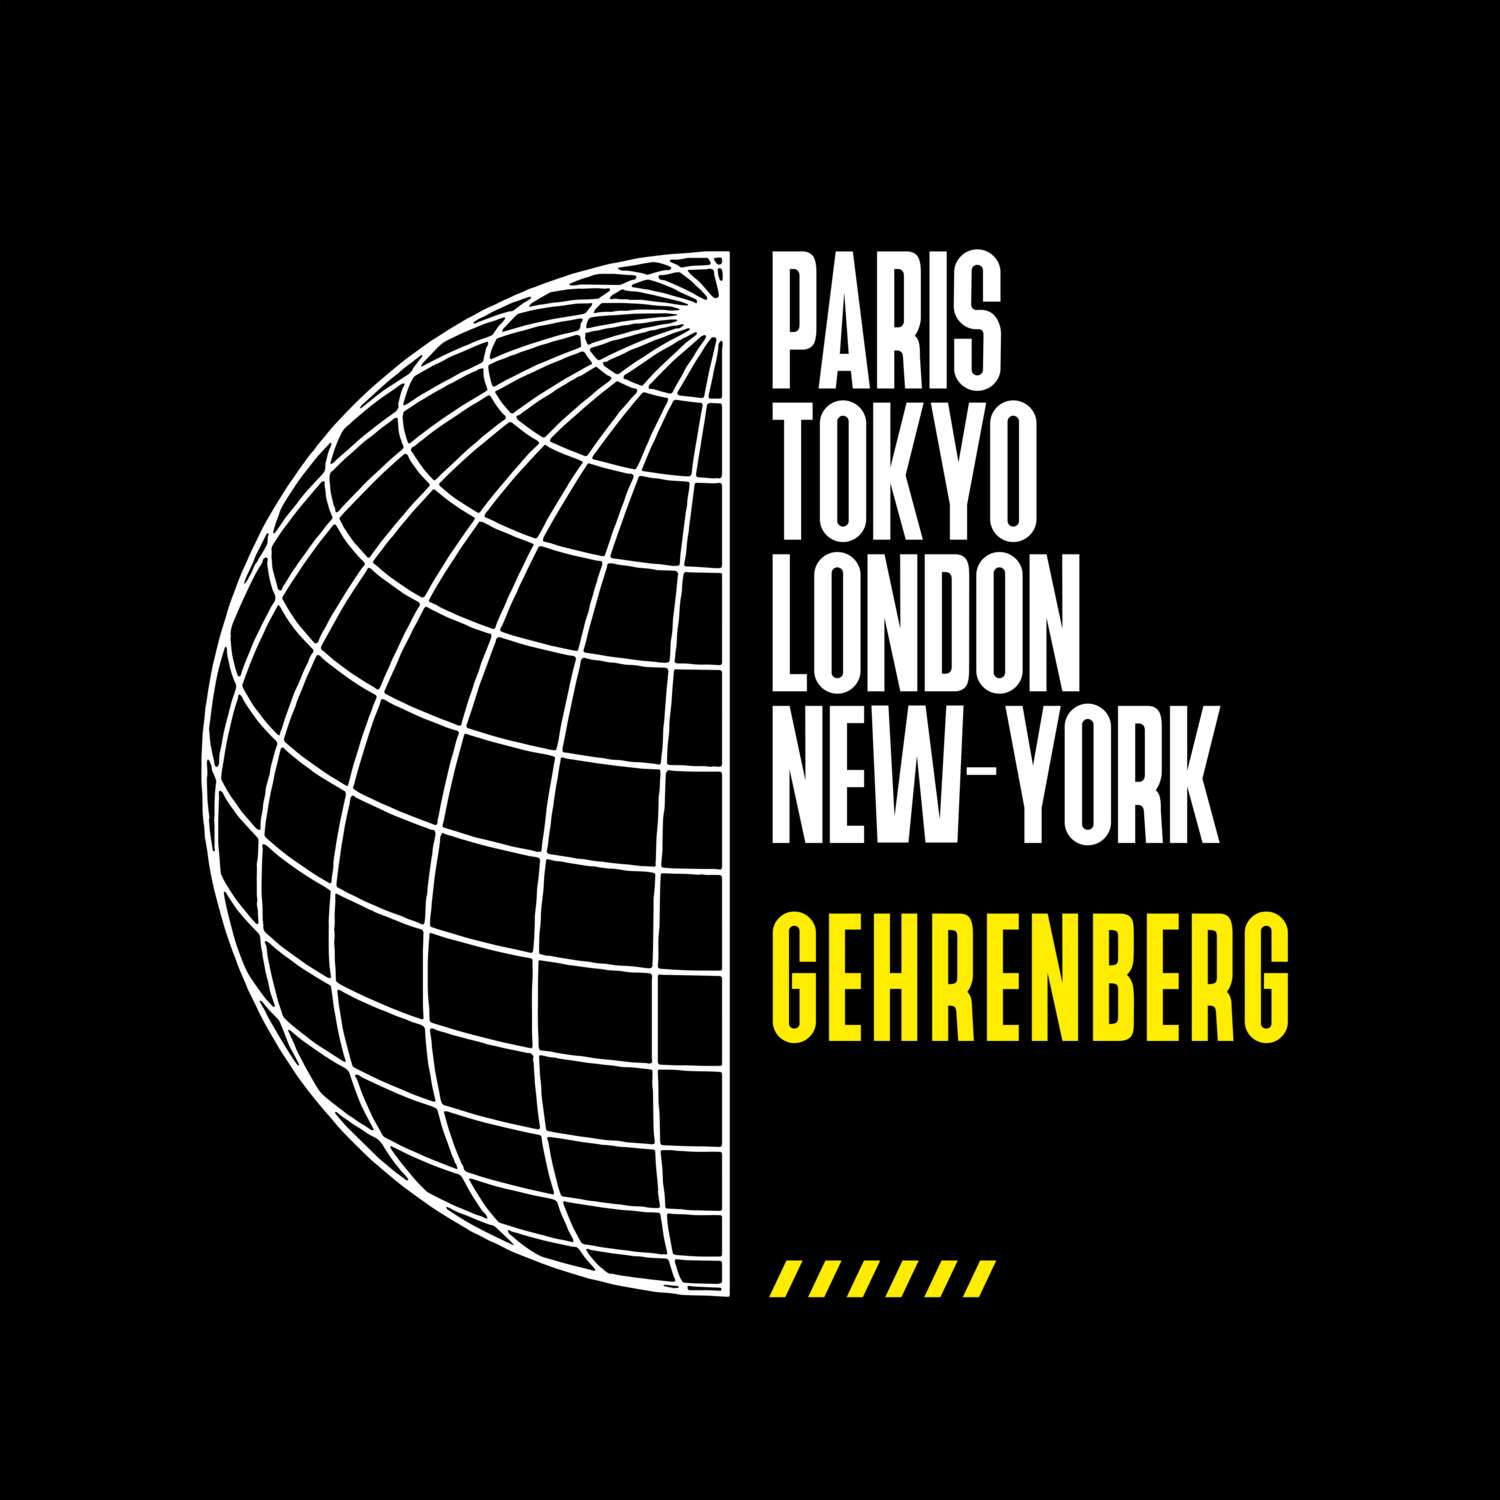 Gehrenberg T-Shirt »Paris Tokyo London«